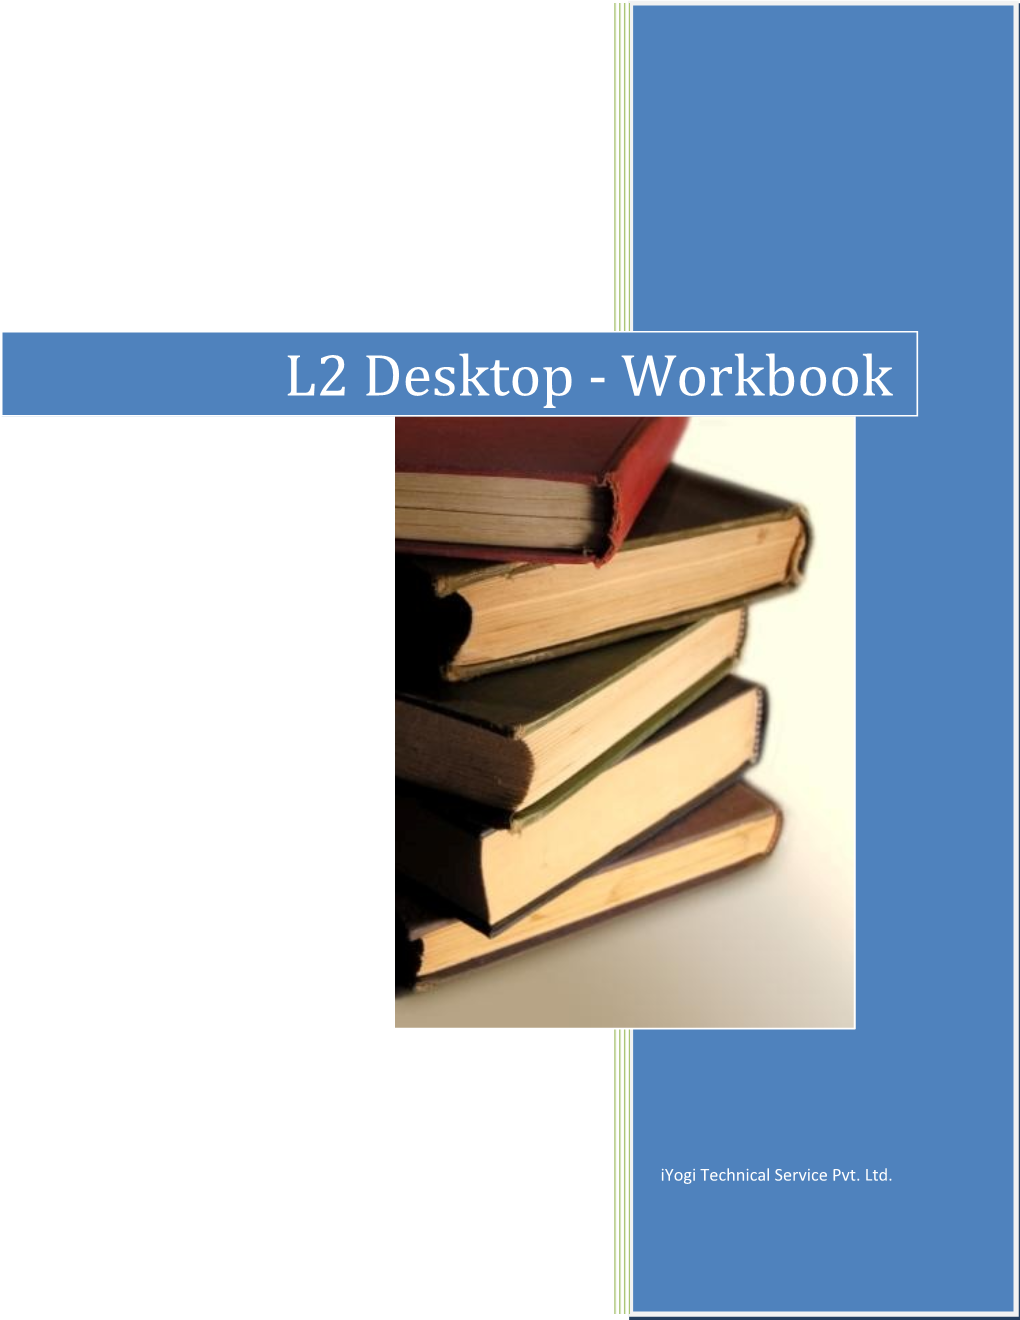 L2 Desktop - Workbook